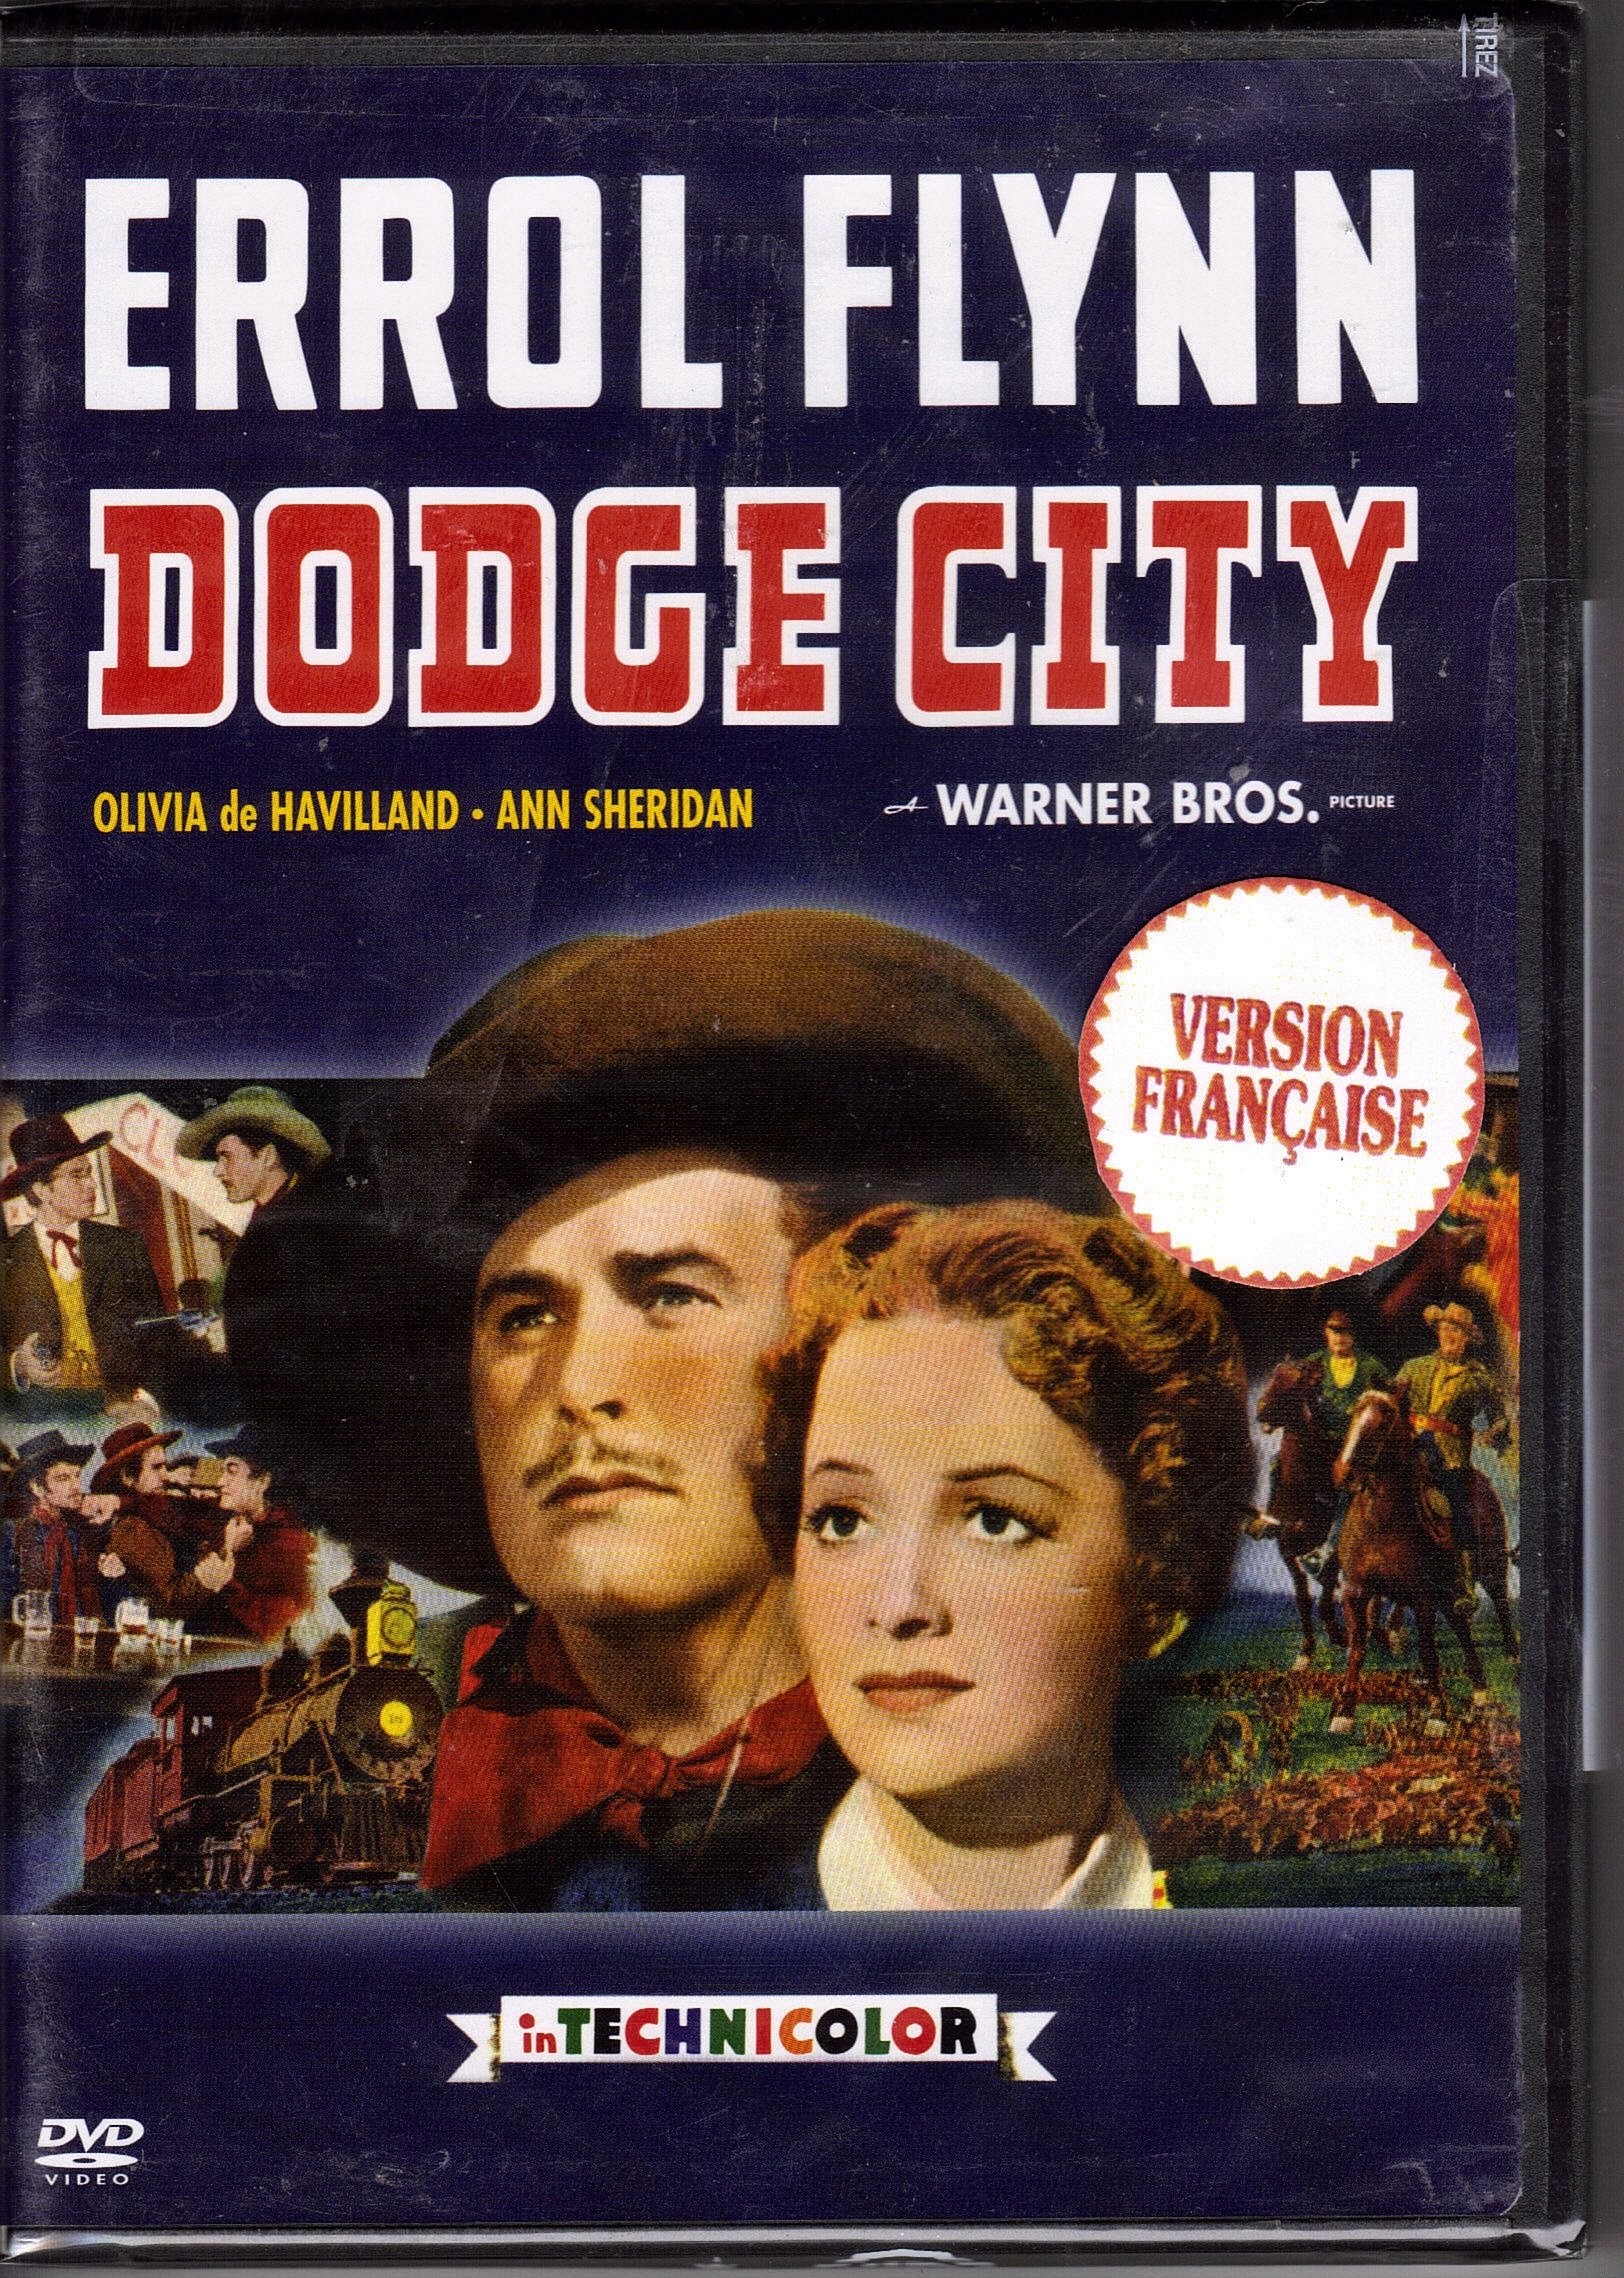 Dodge City on MovieShack